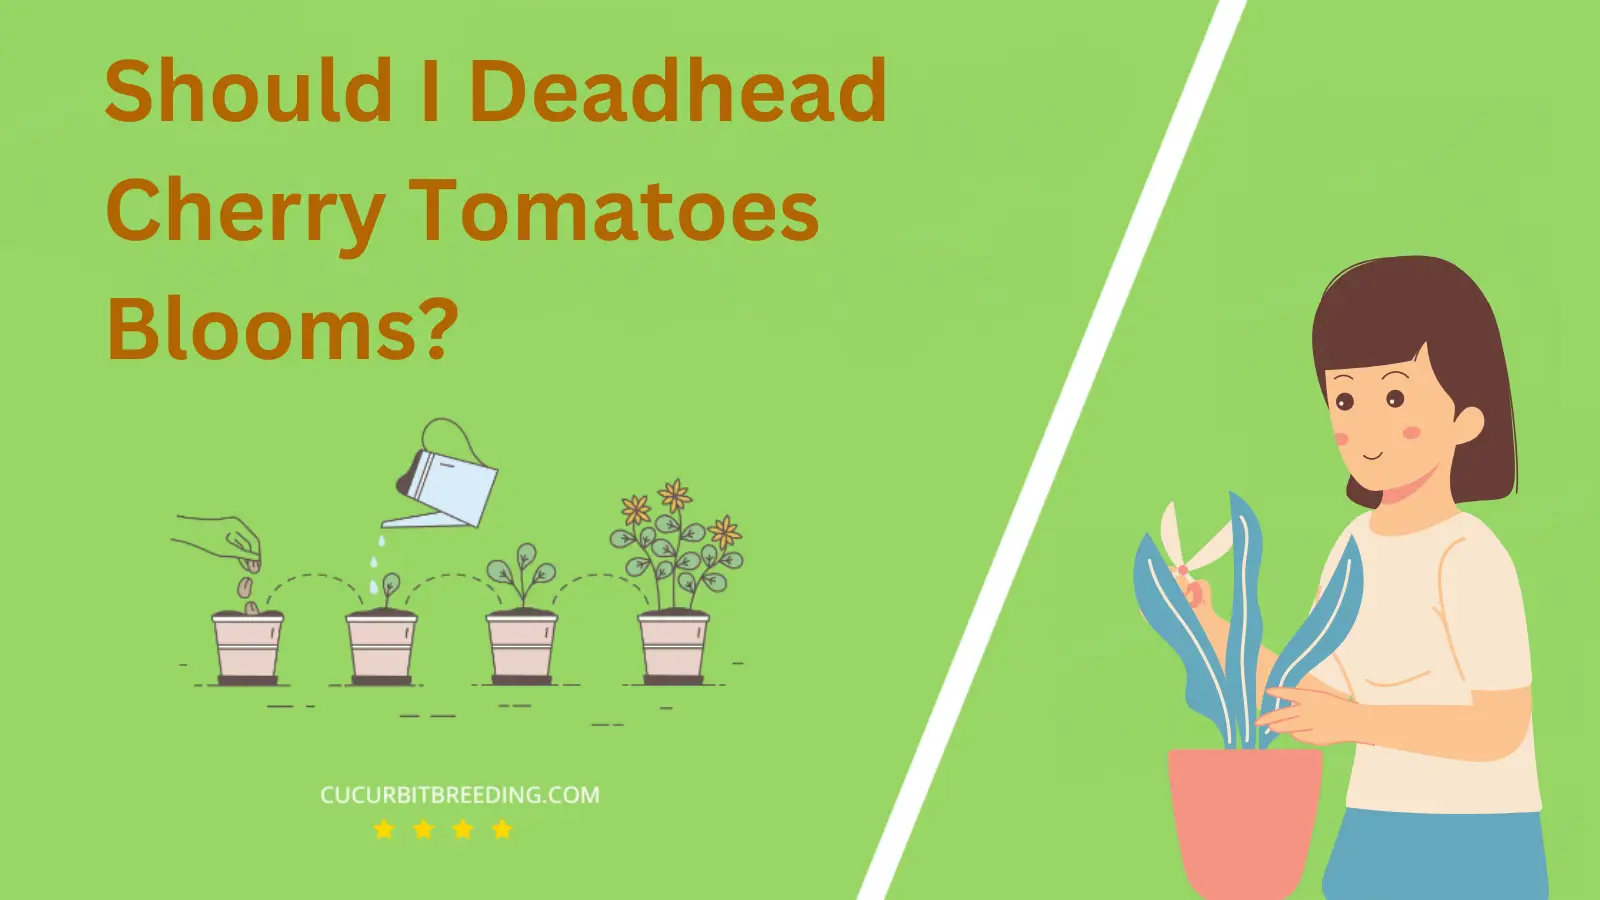 Should I Deadhead Cherry Tomatoes Blooms?